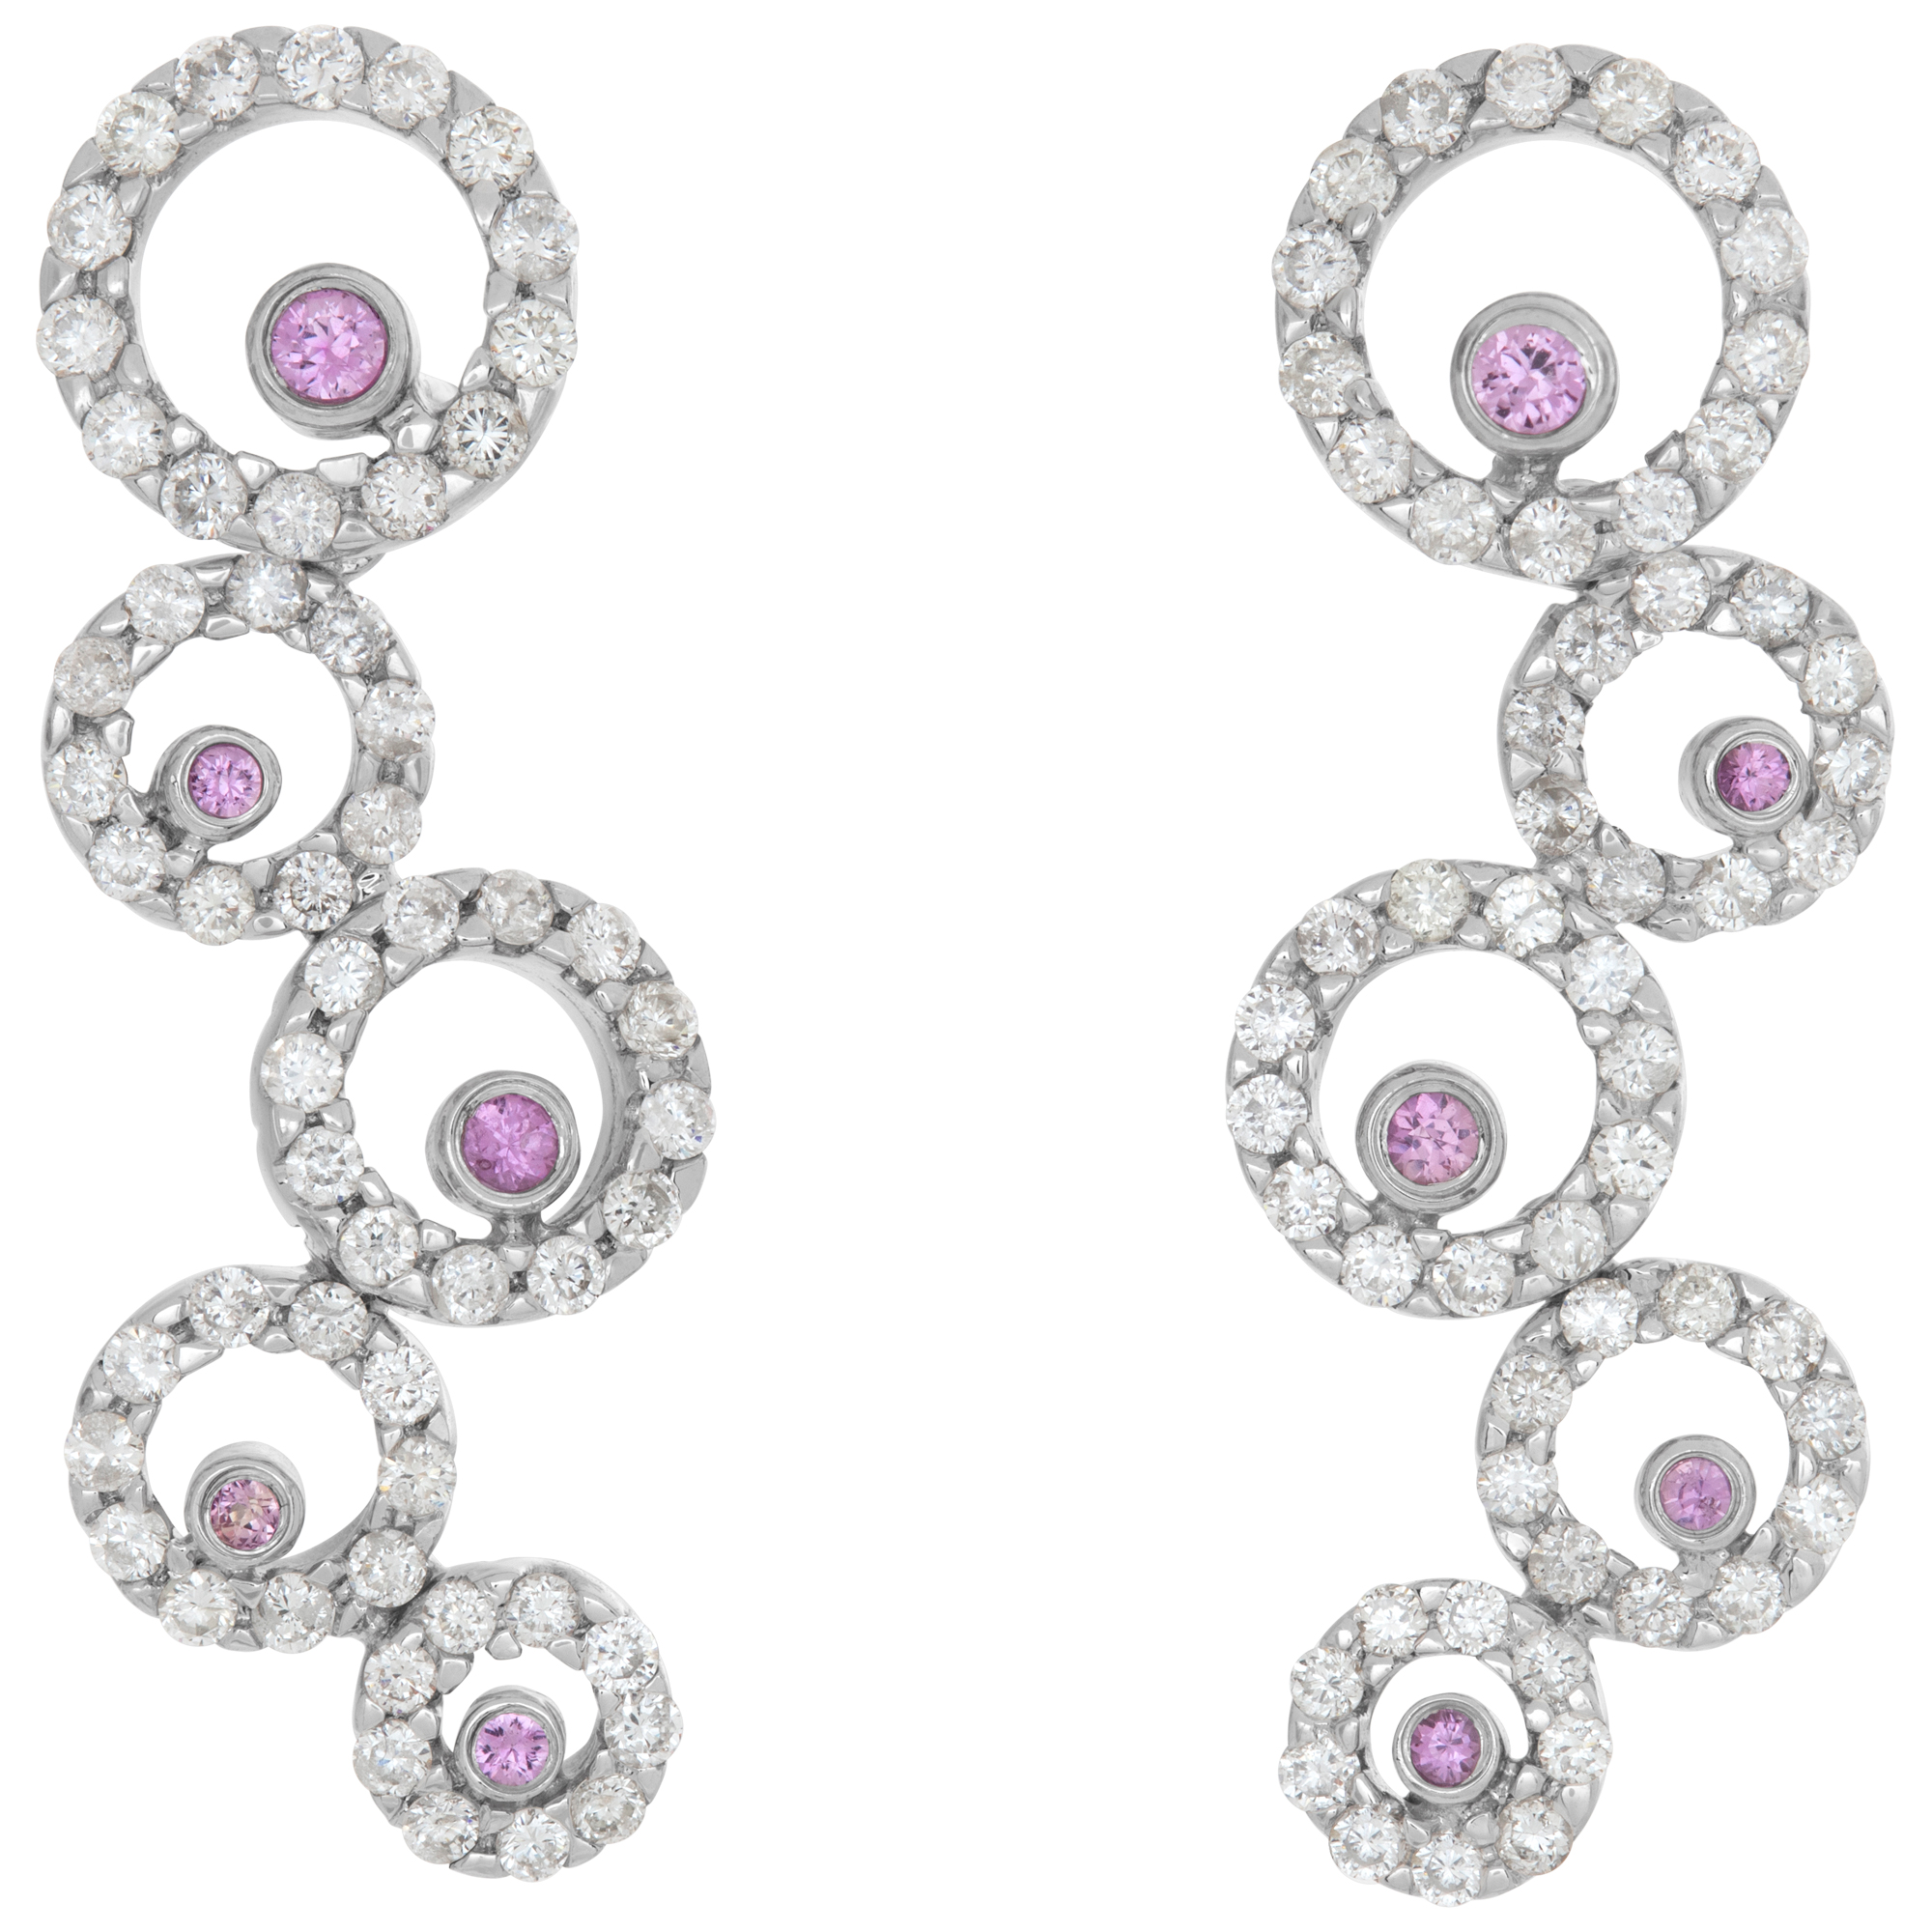 Dangling diamonds halo circle earrings with round cut Torumaline center, set in 14K white gold.